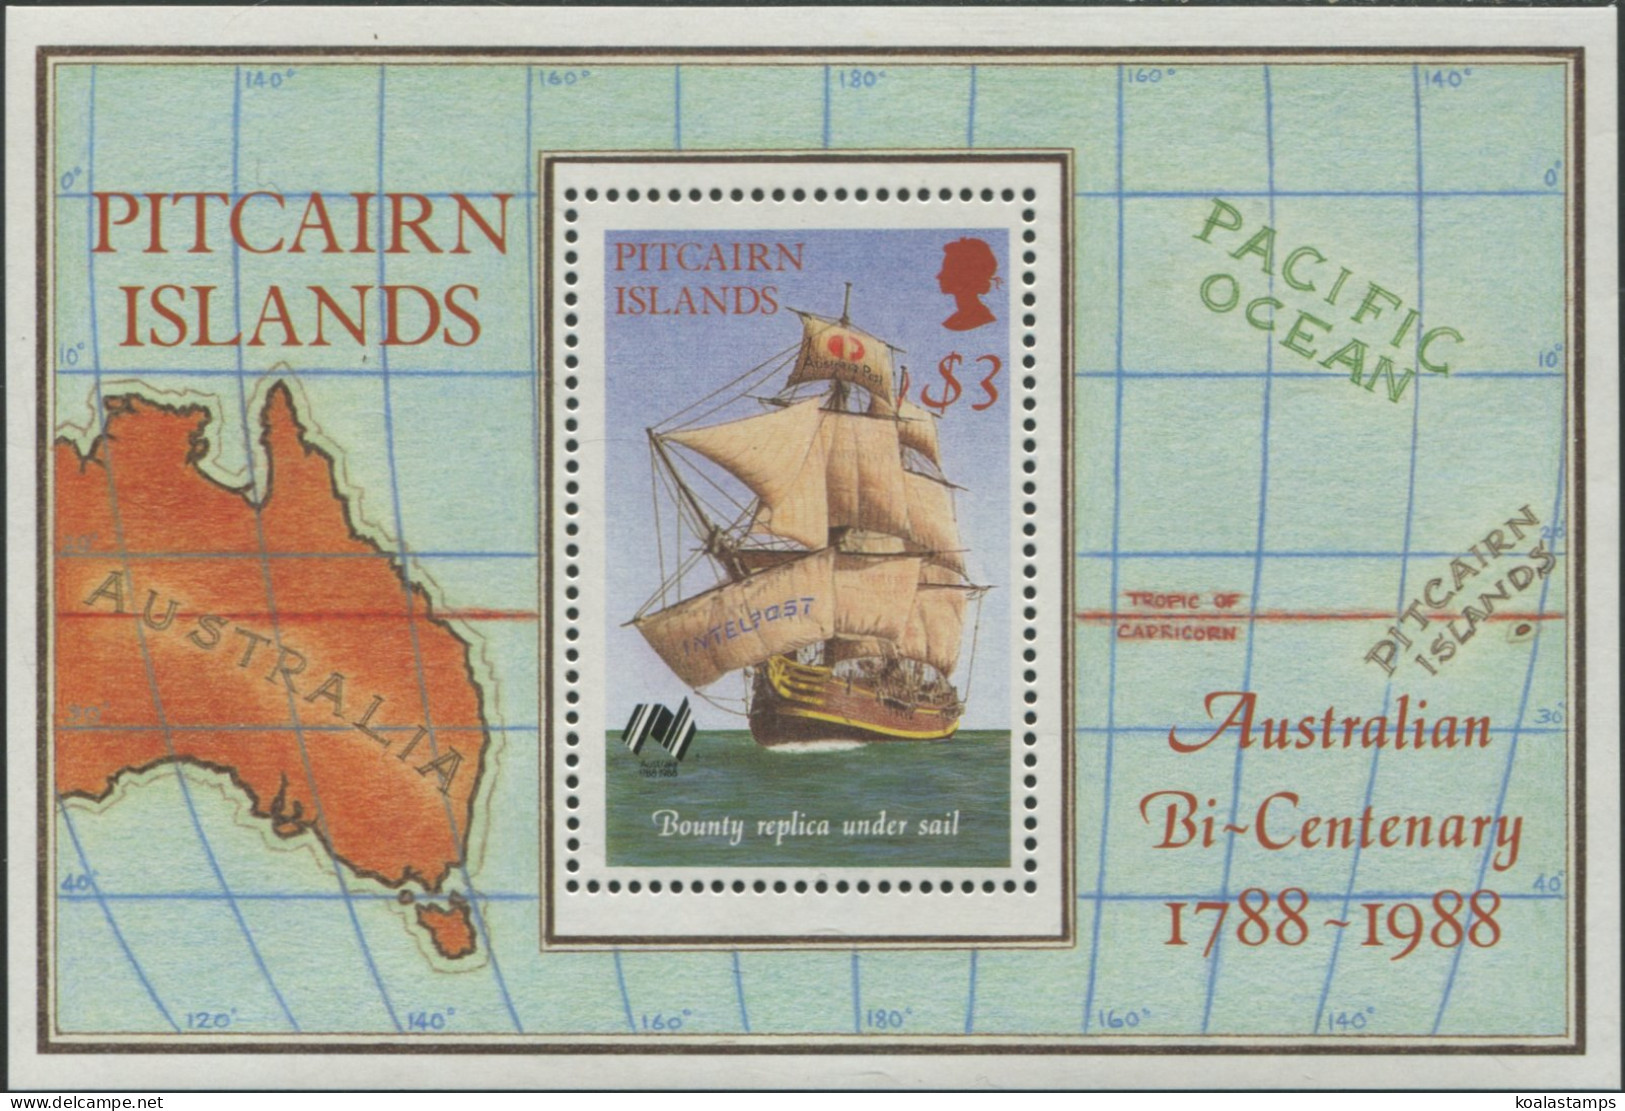 Pitcairn Islands 1988 SG314 $3 Bounty MS MNH - Pitcairn Islands